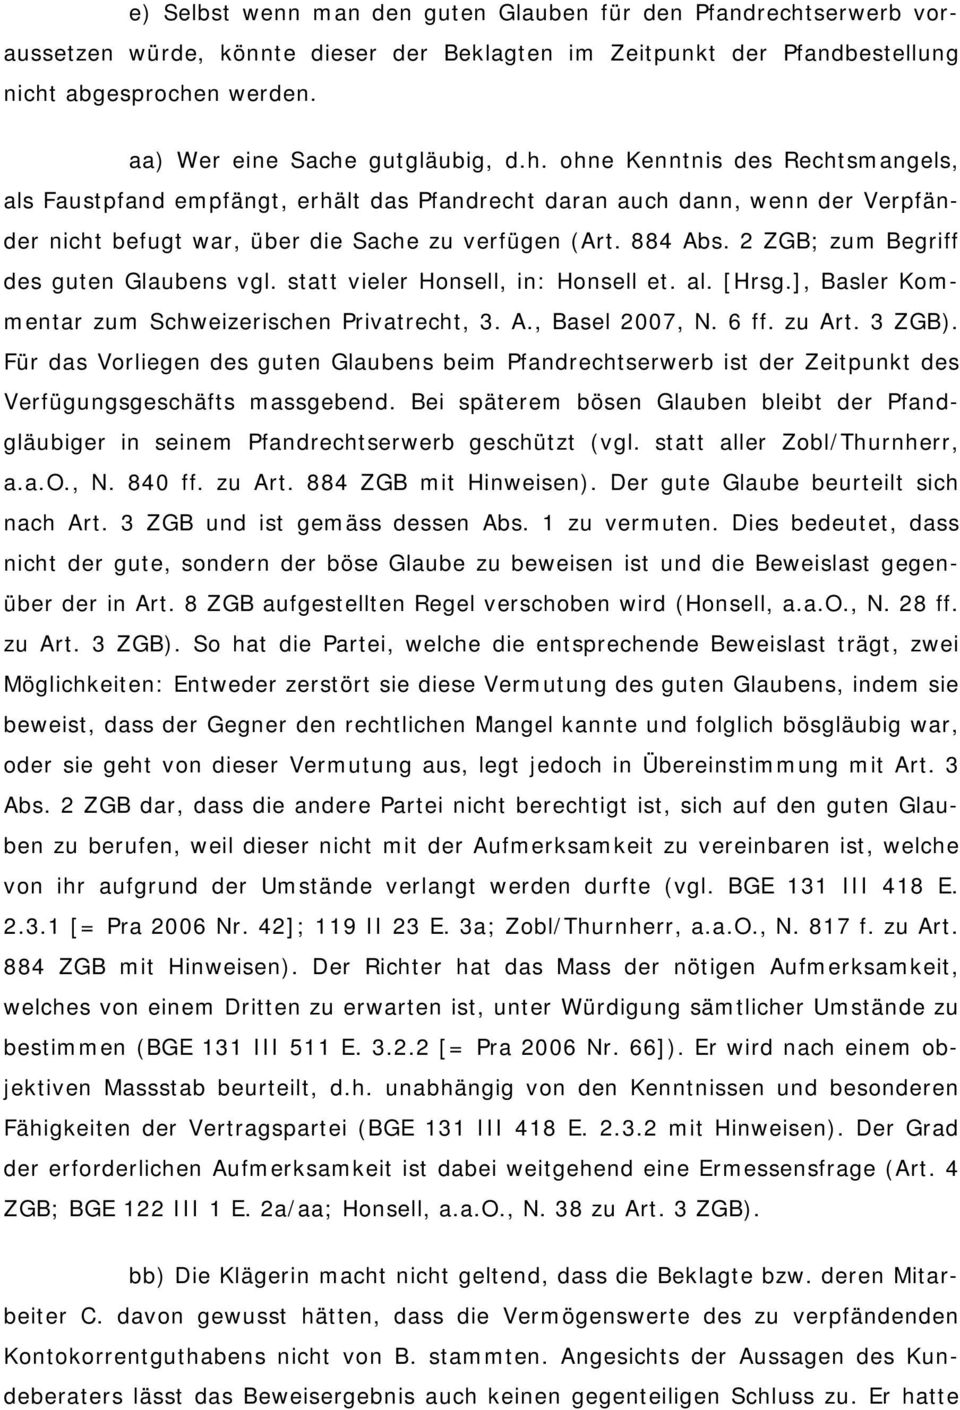 884 Abs. 2 ZGB; zum Begriff des guten Glaubens vgl. statt vieler Honsell, in: Honsell et. al. [Hrsg.], Basler Kommentar zum Schweizerischen Privatrecht, 3. A., Basel 2007, N. 6 ff. zu Art. 3 ZGB).